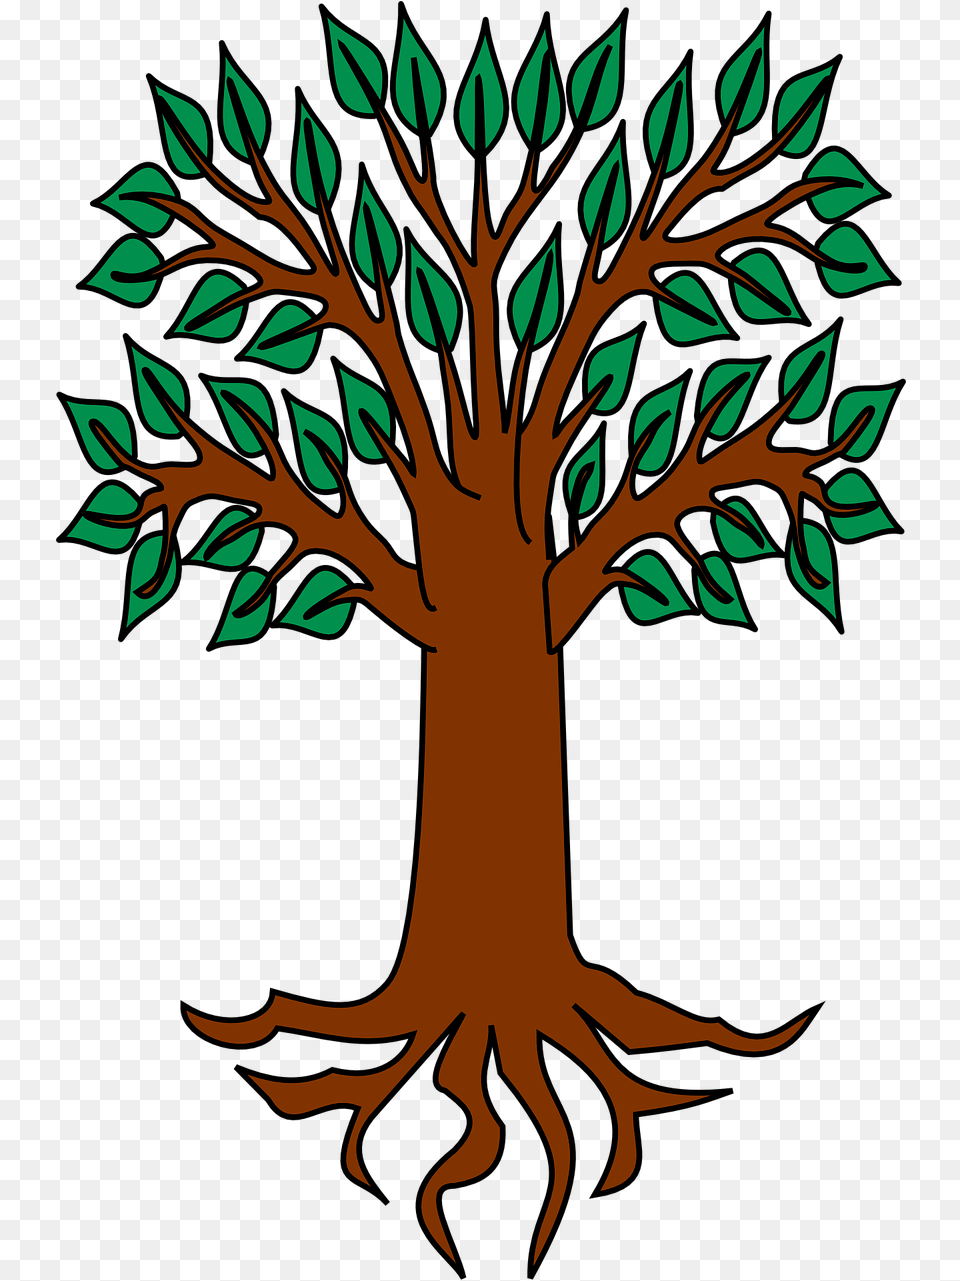 Tree Heraldic Symbol Palm Trees In Heraldry, Plant, Art, Vegetation, Root Png Image